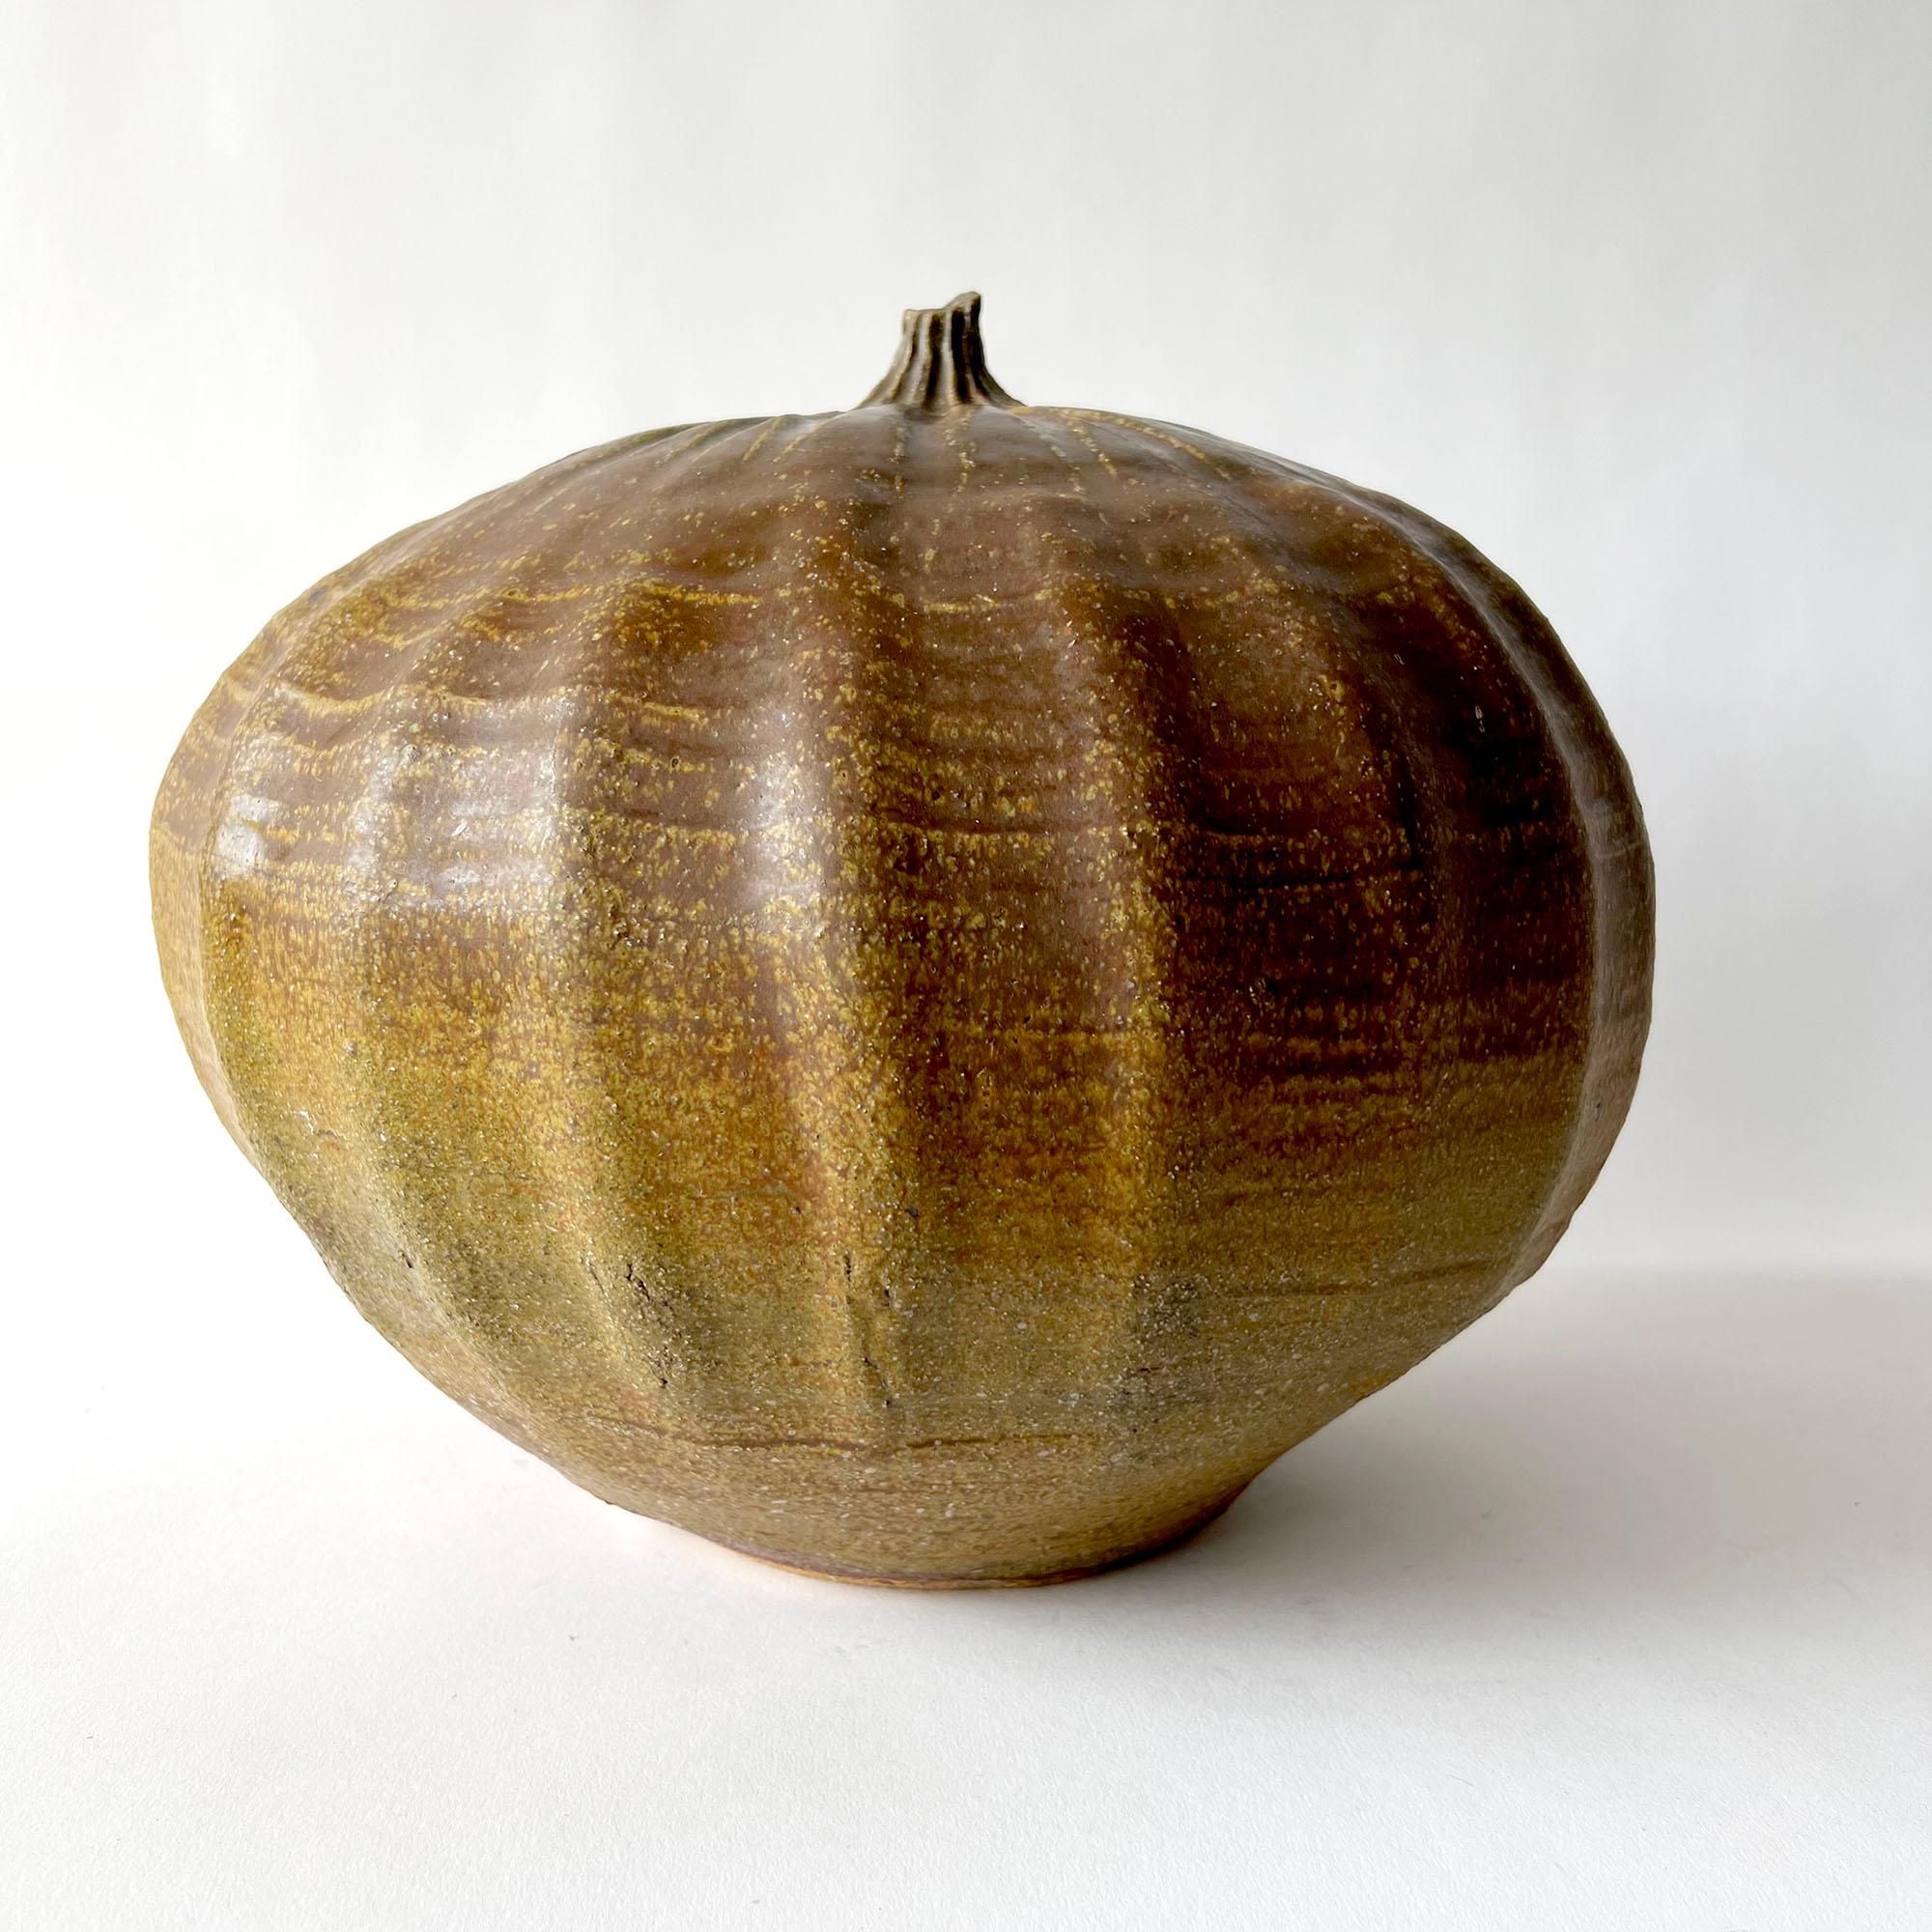 Handmade California studio gourd or pumpkin sculpture vase. Piece measures 12